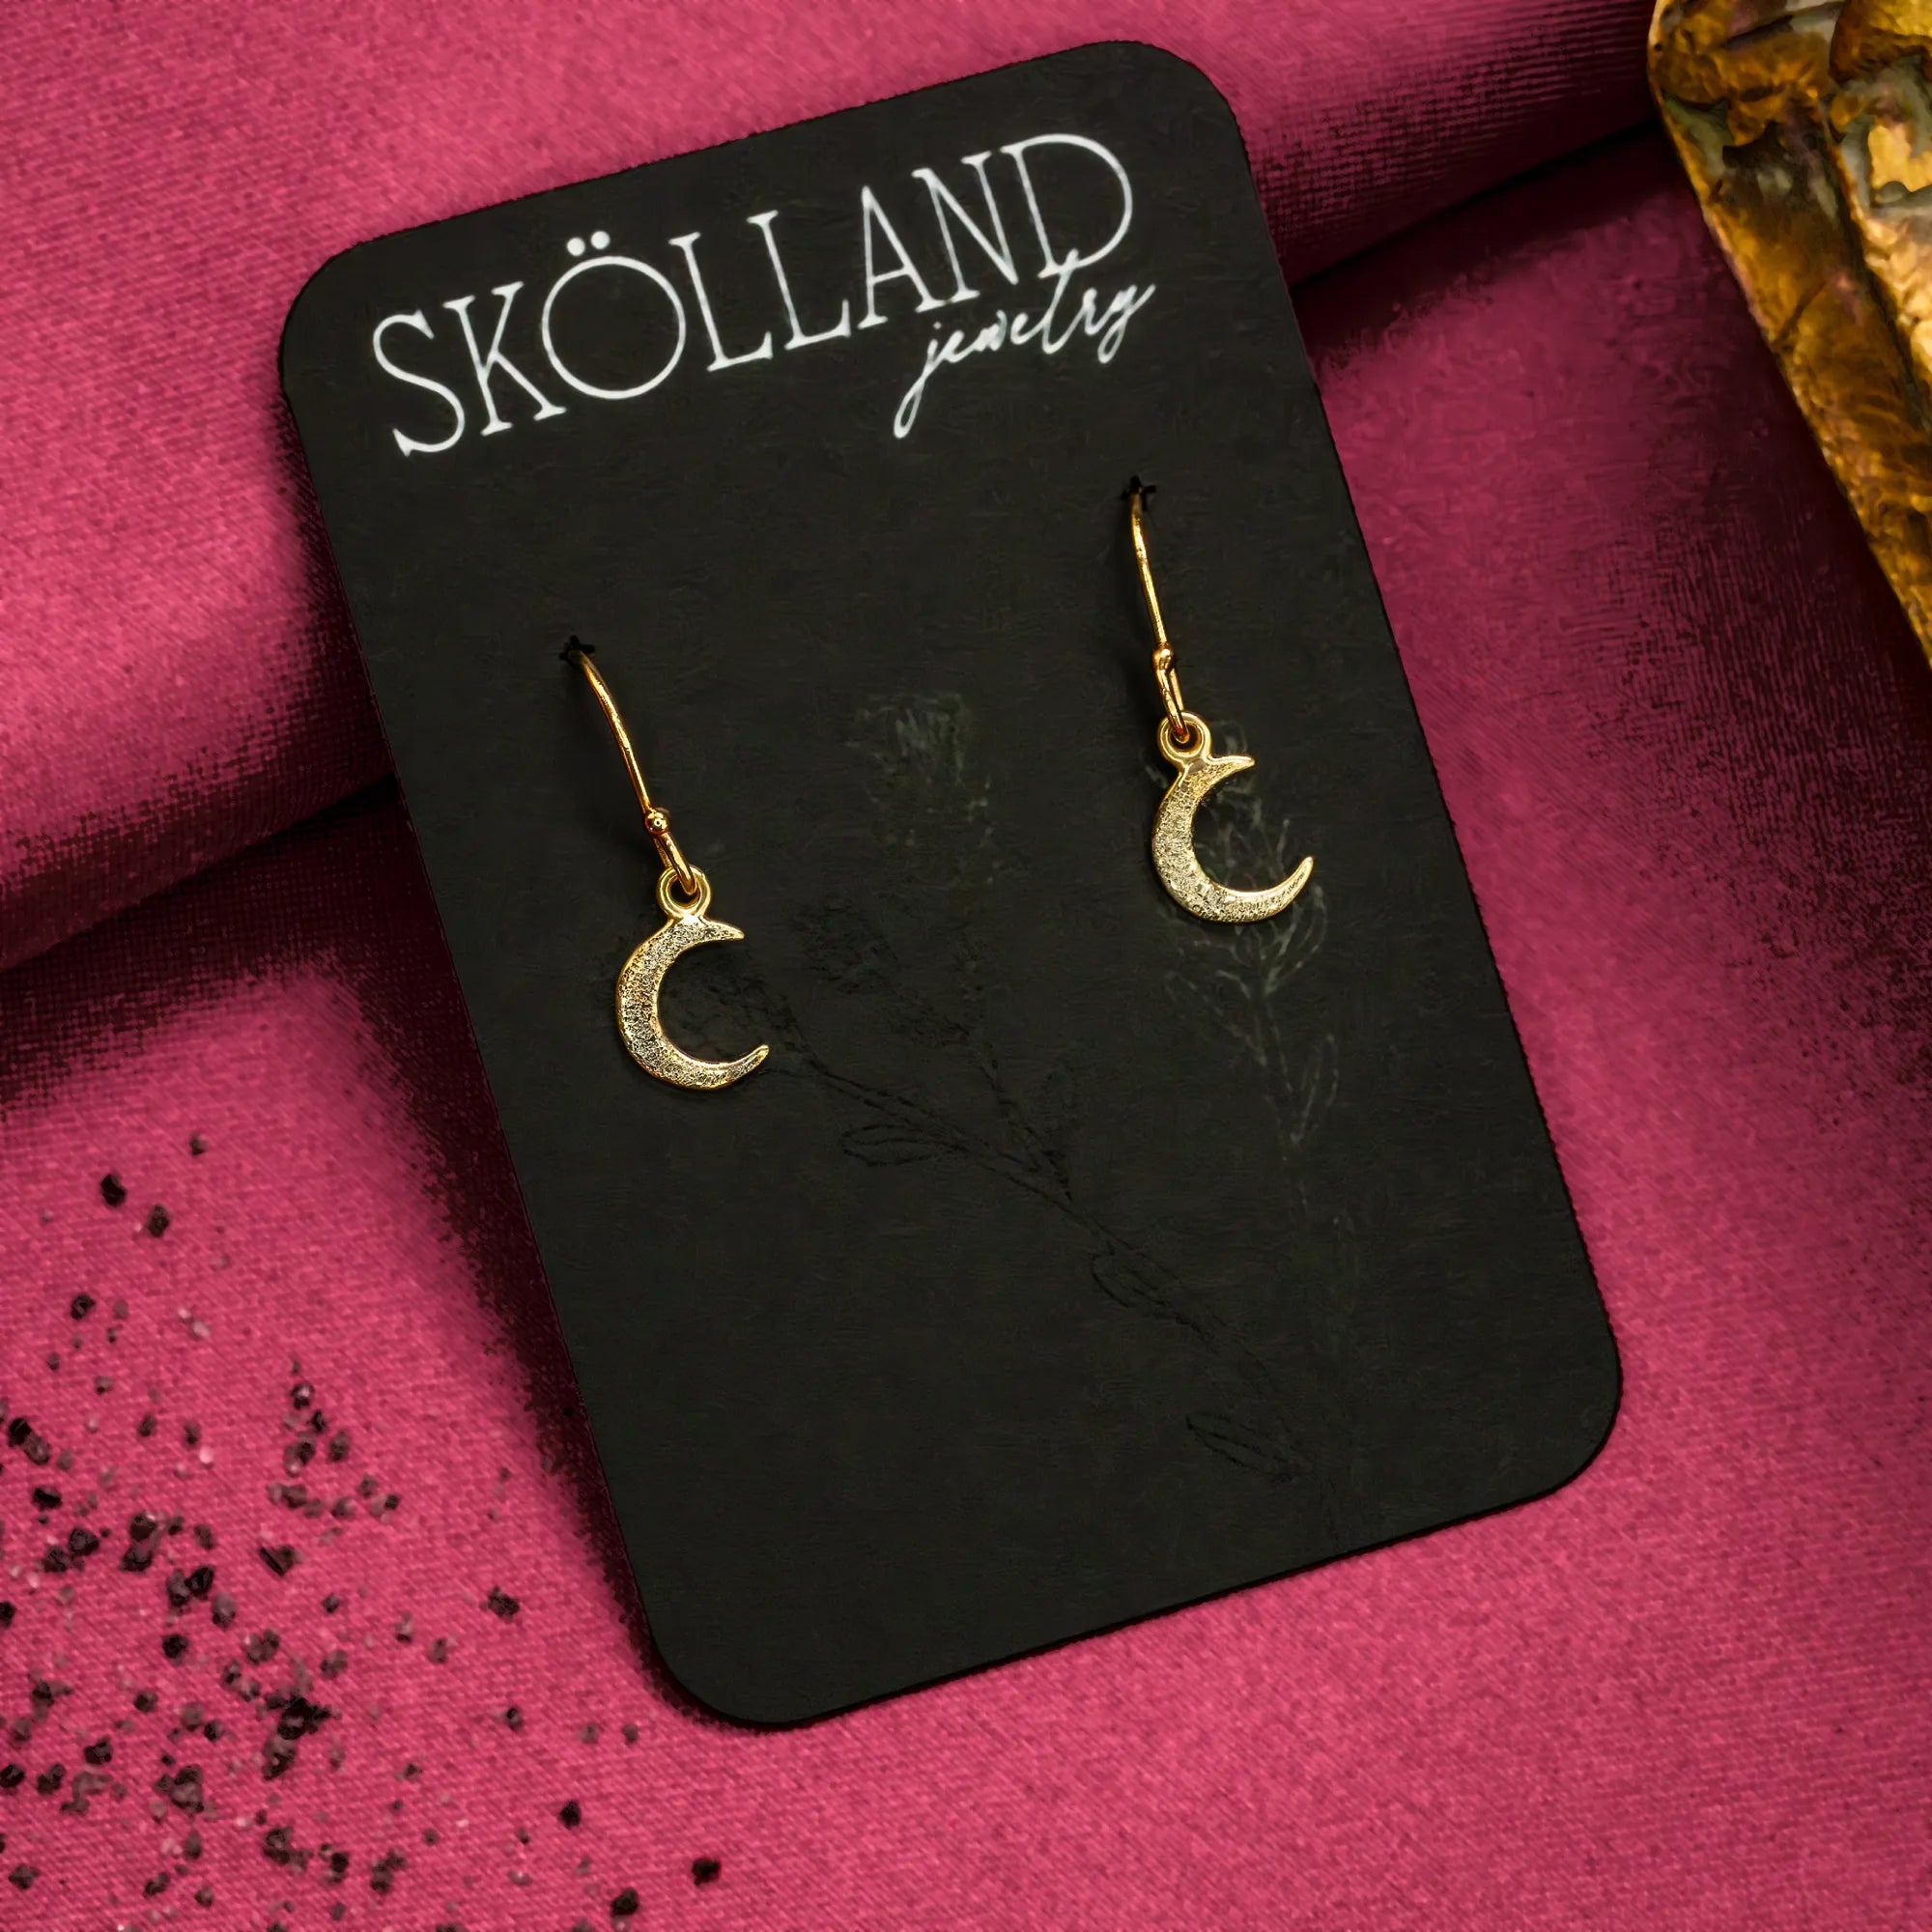 A pair of dangly gold moon earrings on a black Skolland Jewelry earring card. 